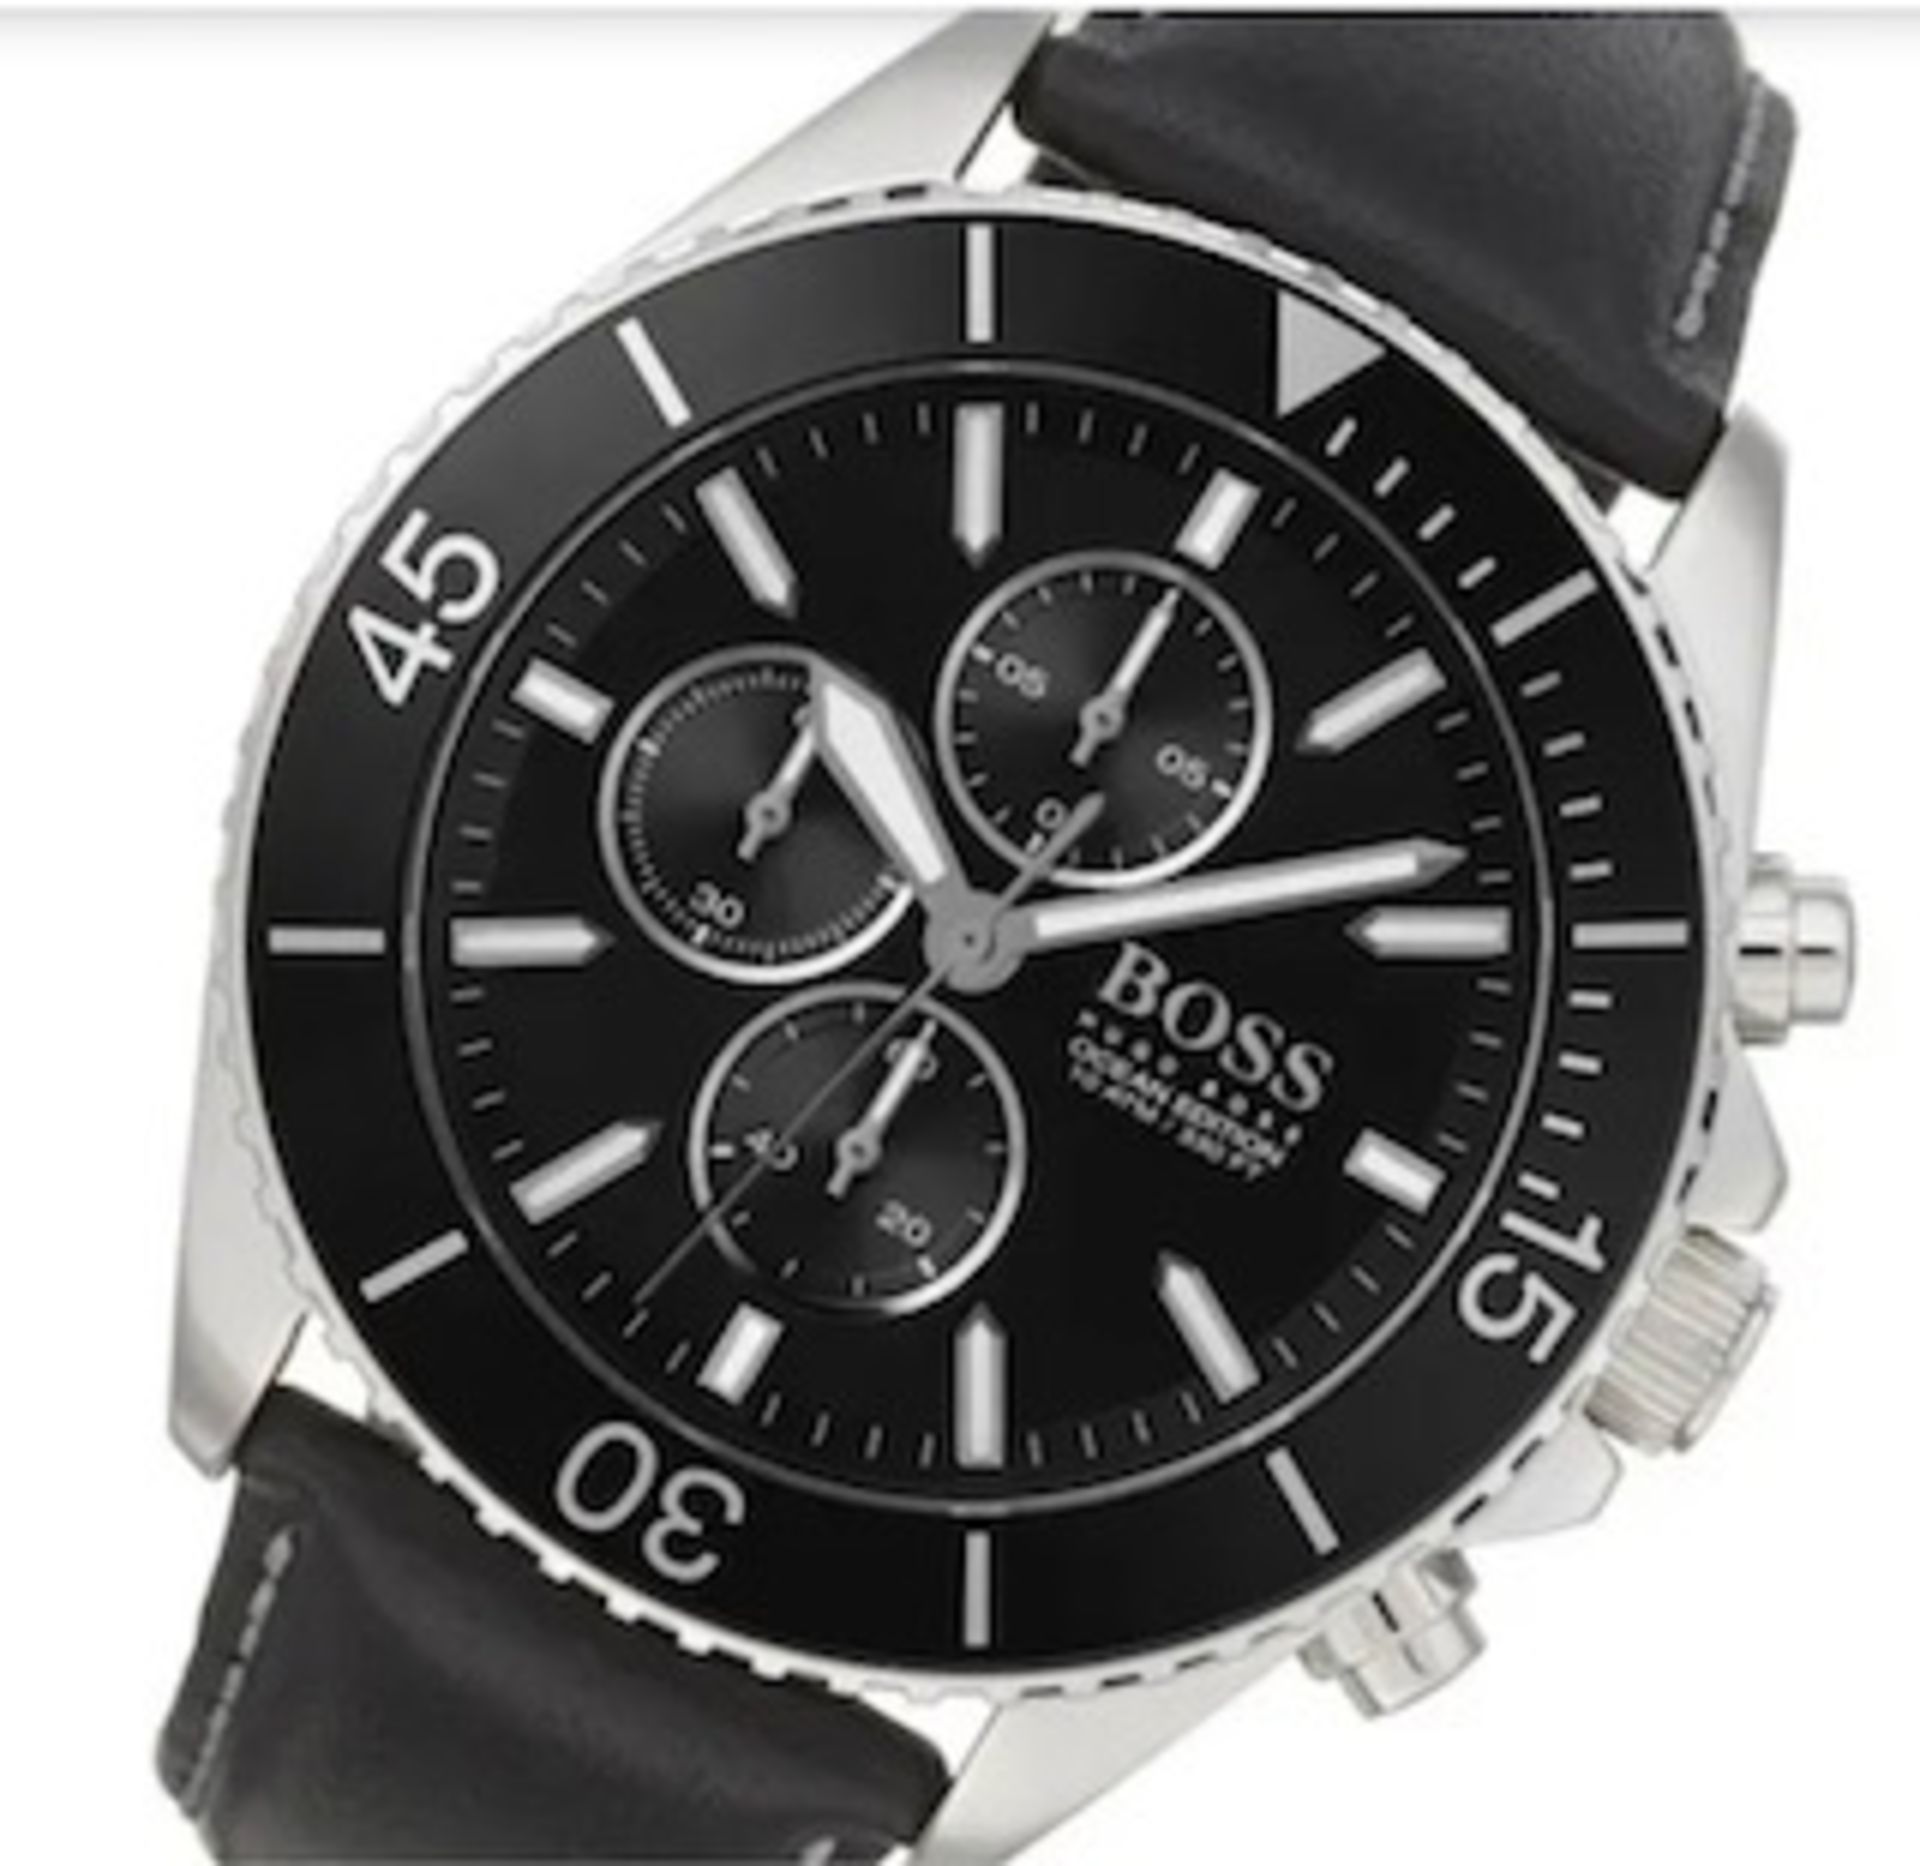 Hugo Boss 1513697 Men's Ocean Edition Black Leather Strap Chronograph Watch - Image 3 of 5